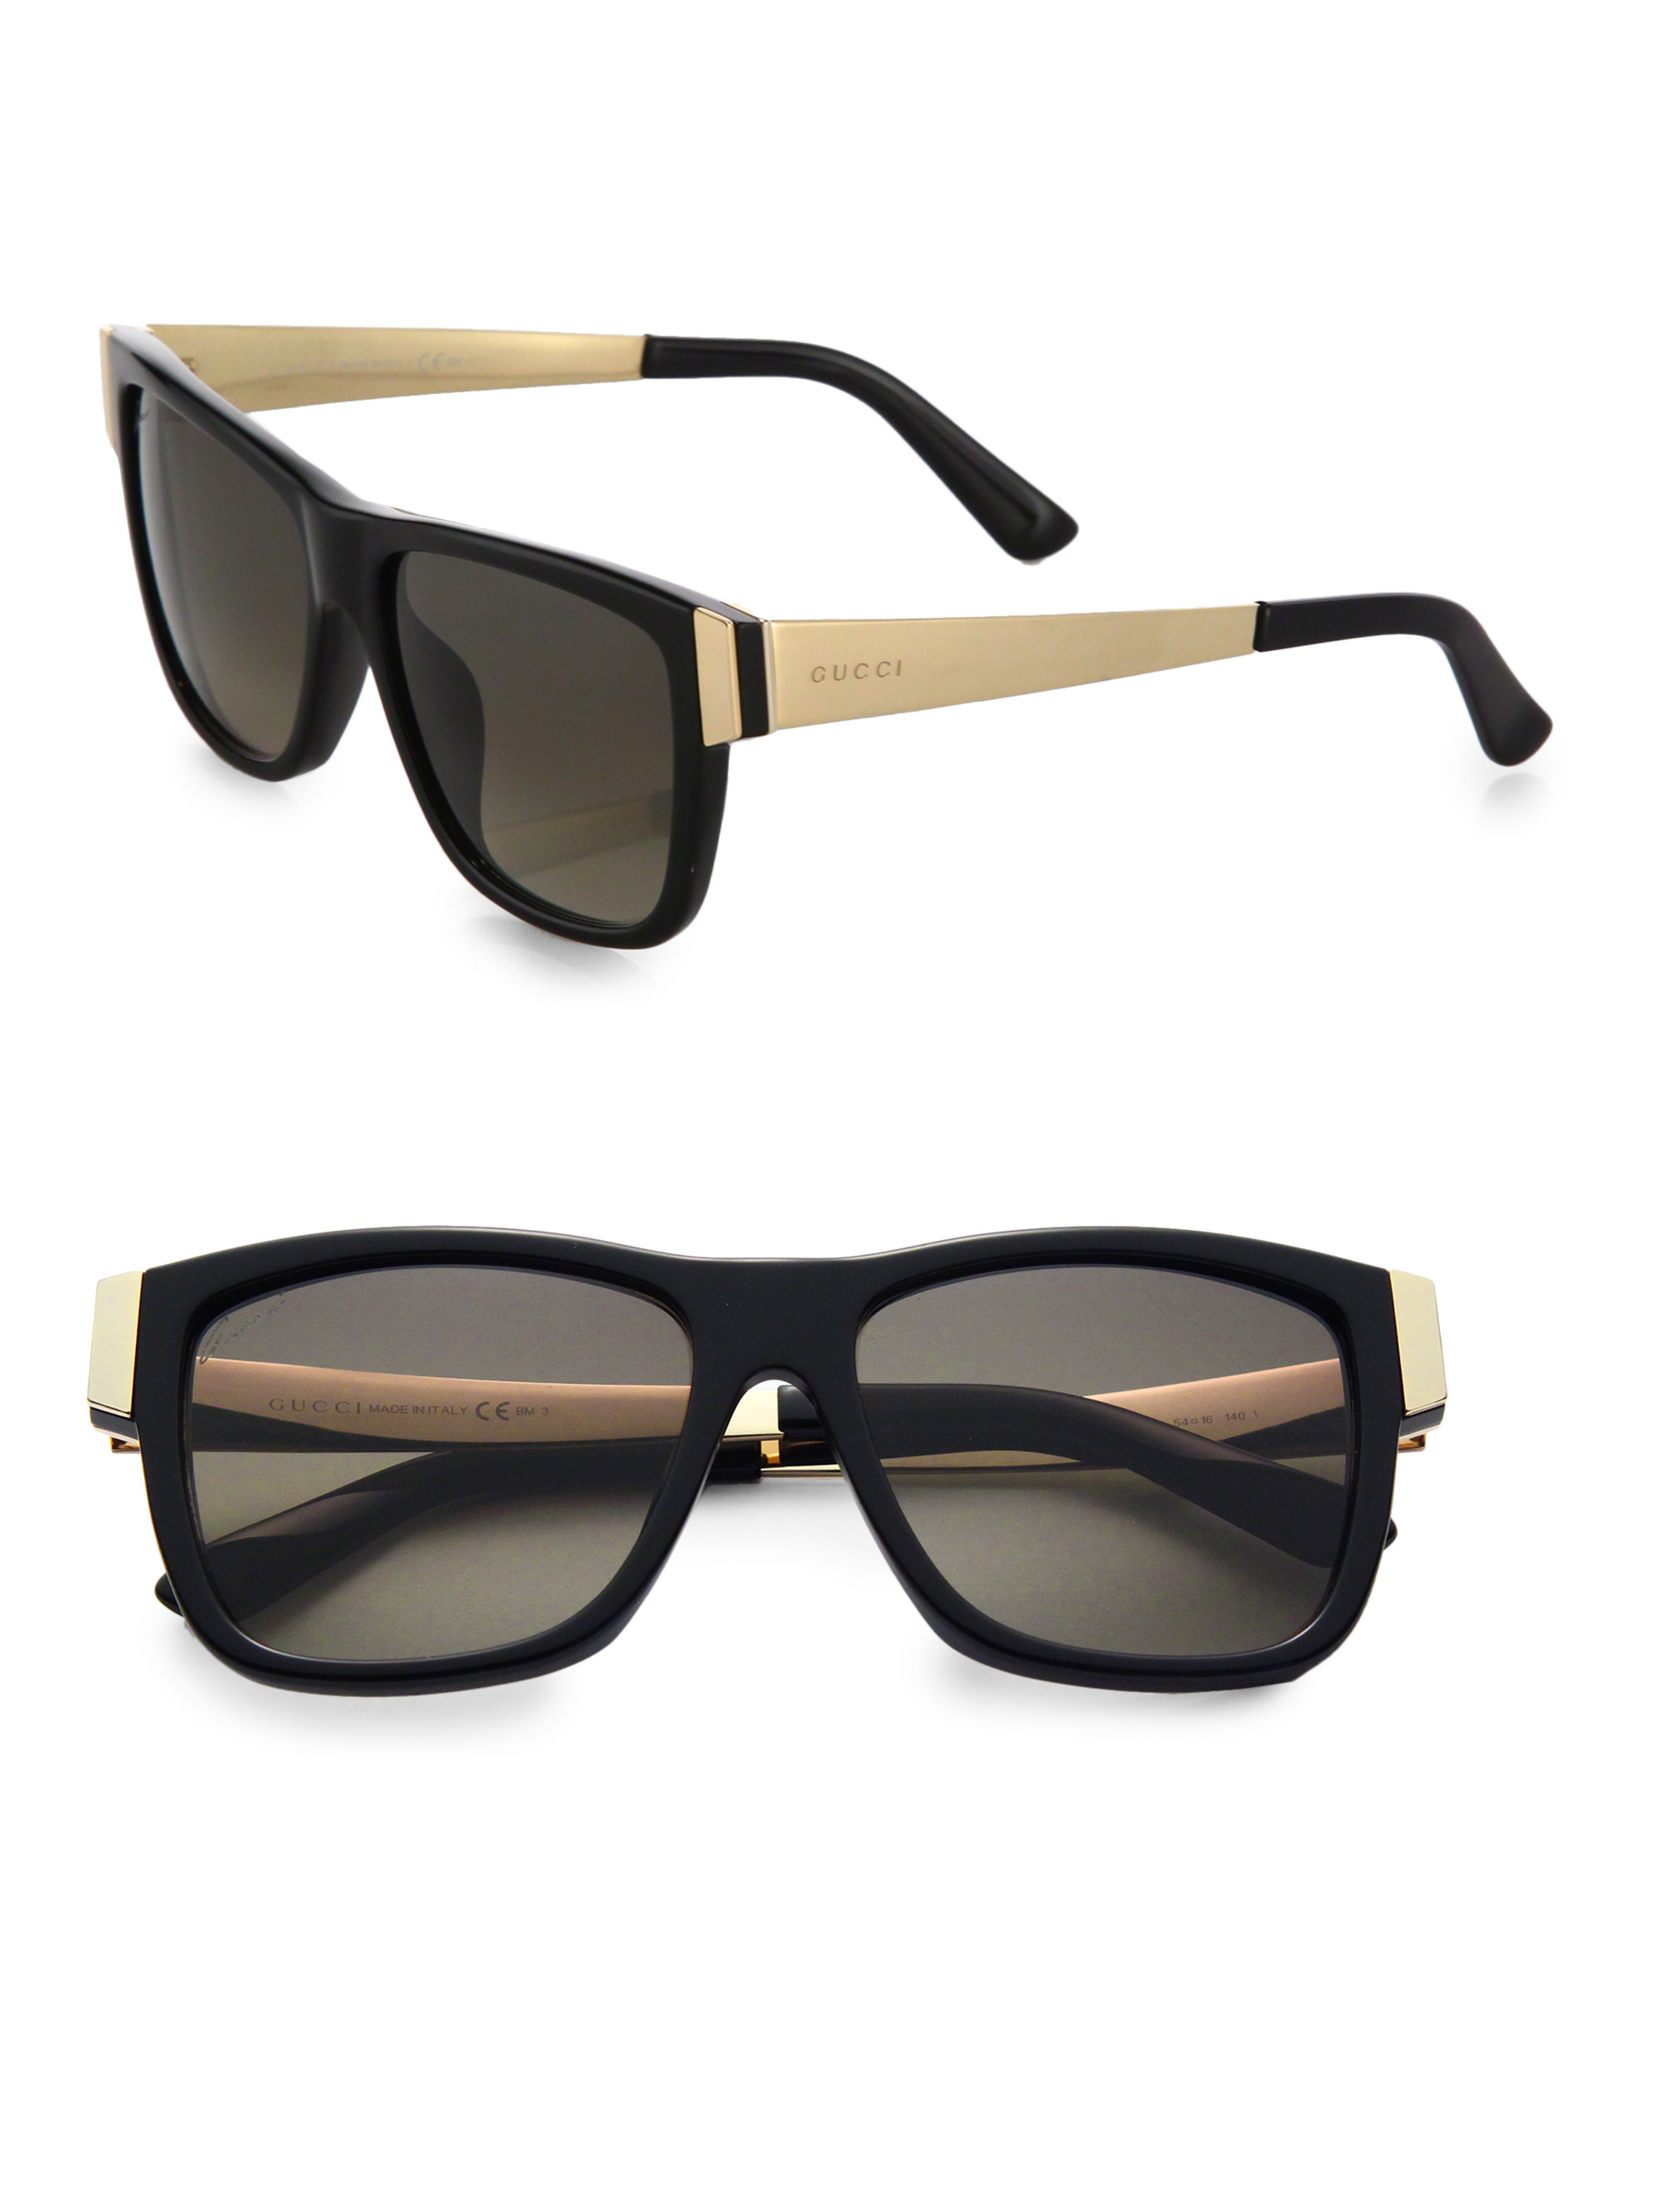 Lyst - Gucci Colorblocked 54mm Square Sunglasses in Black for Men